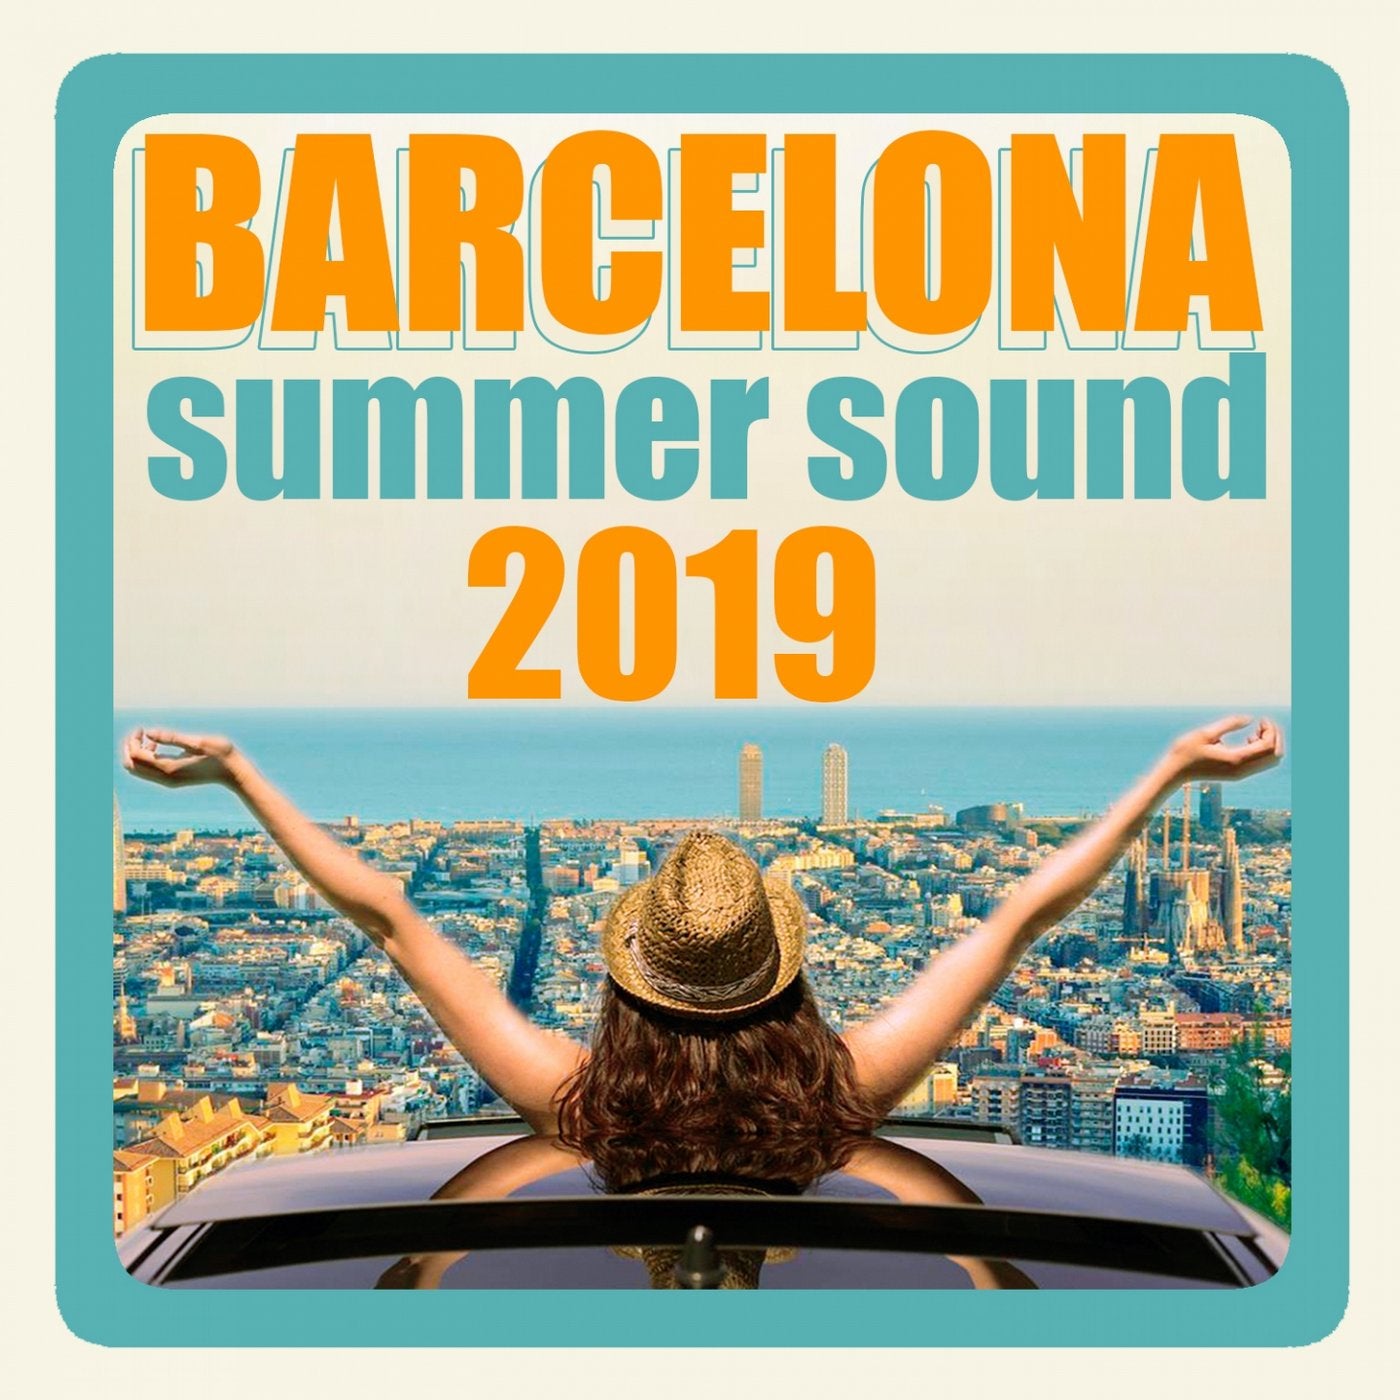 Barcelona Summer Sound 2019